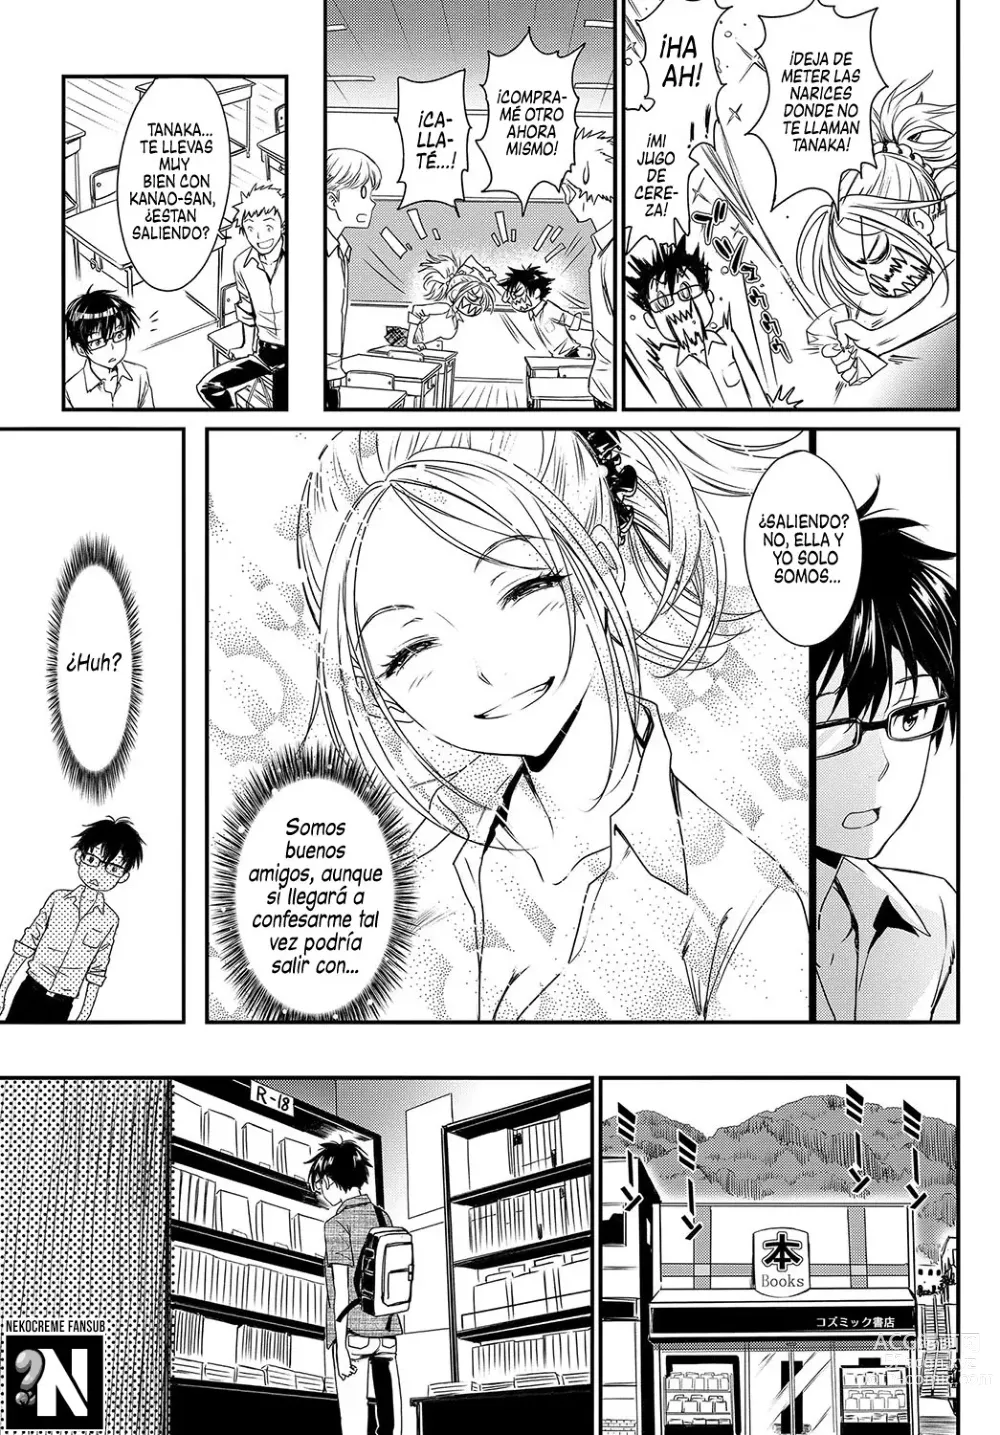 Page 5 of manga Rapsodia de Hacer el Amor